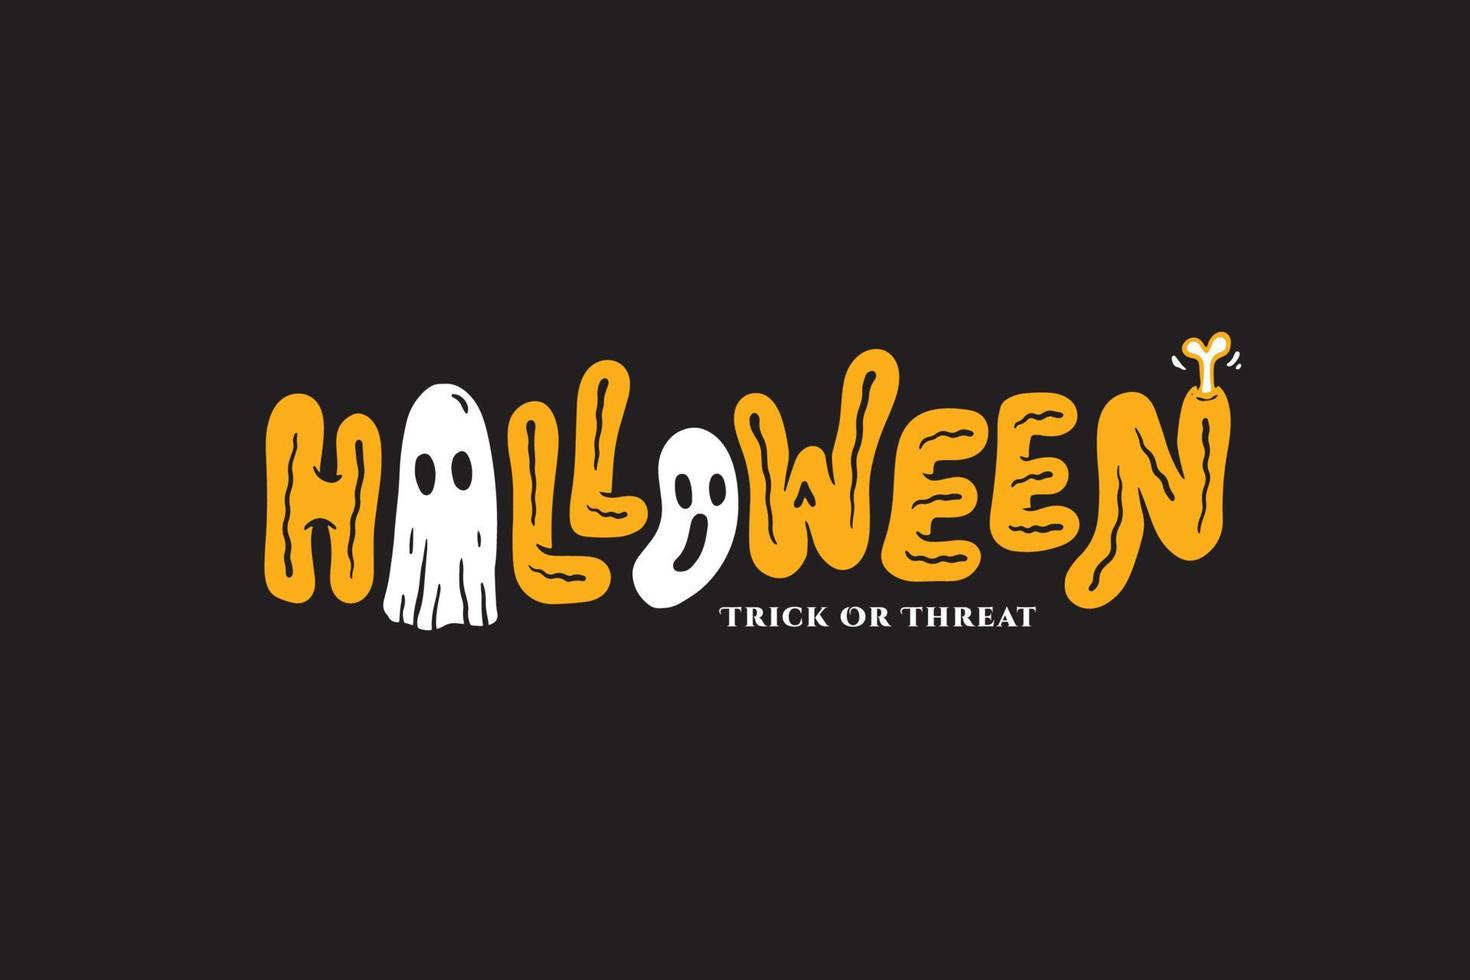 Halloween Trick or Threat Typography vector